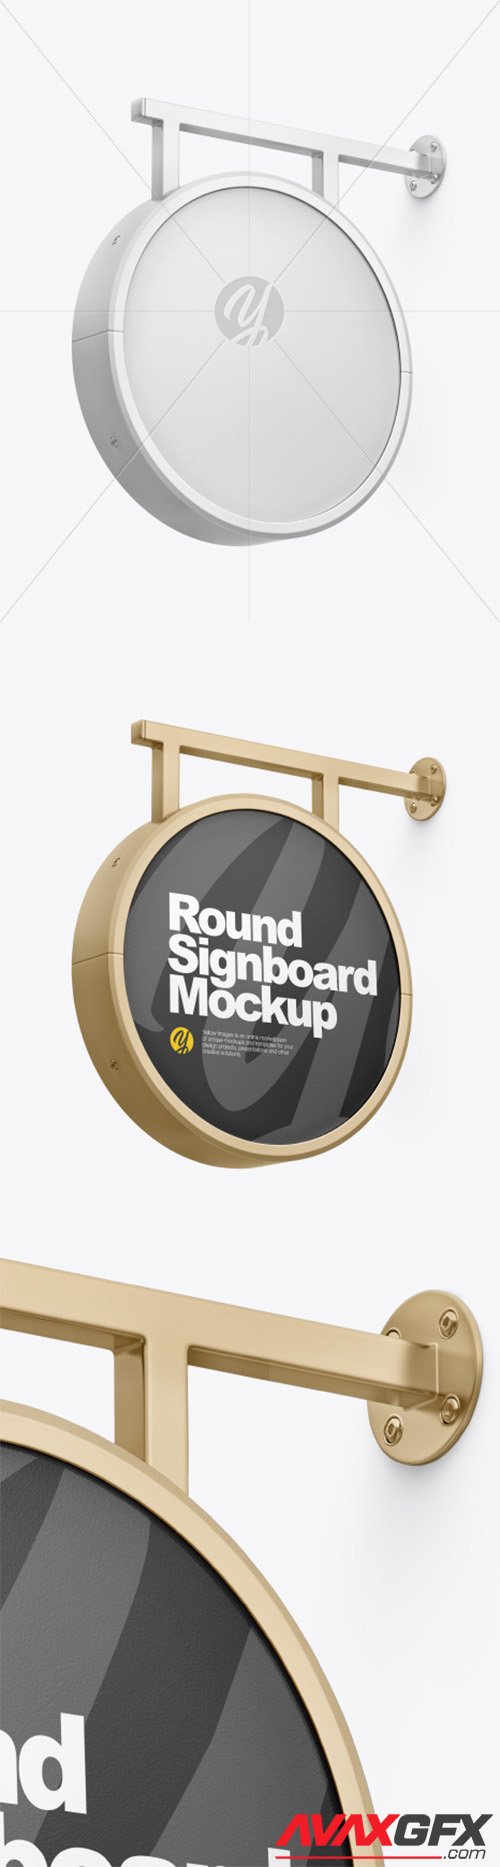 Metallic Round Signboard Mockup 80003